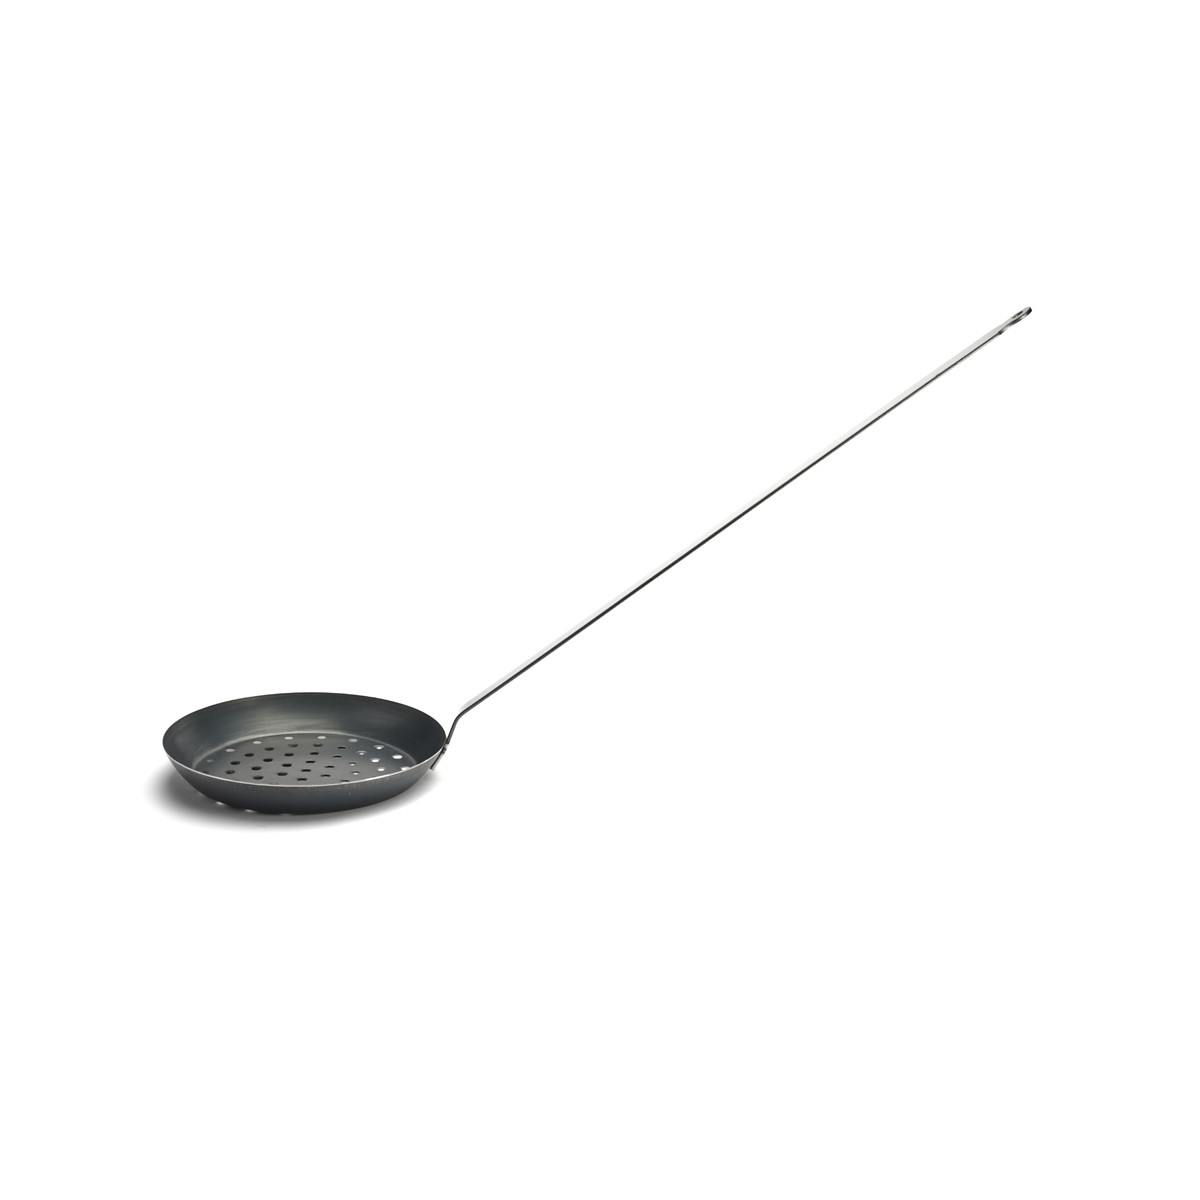 Chestnut pan with side ventilation, mild steel, , Chestnut pans - De Buyer